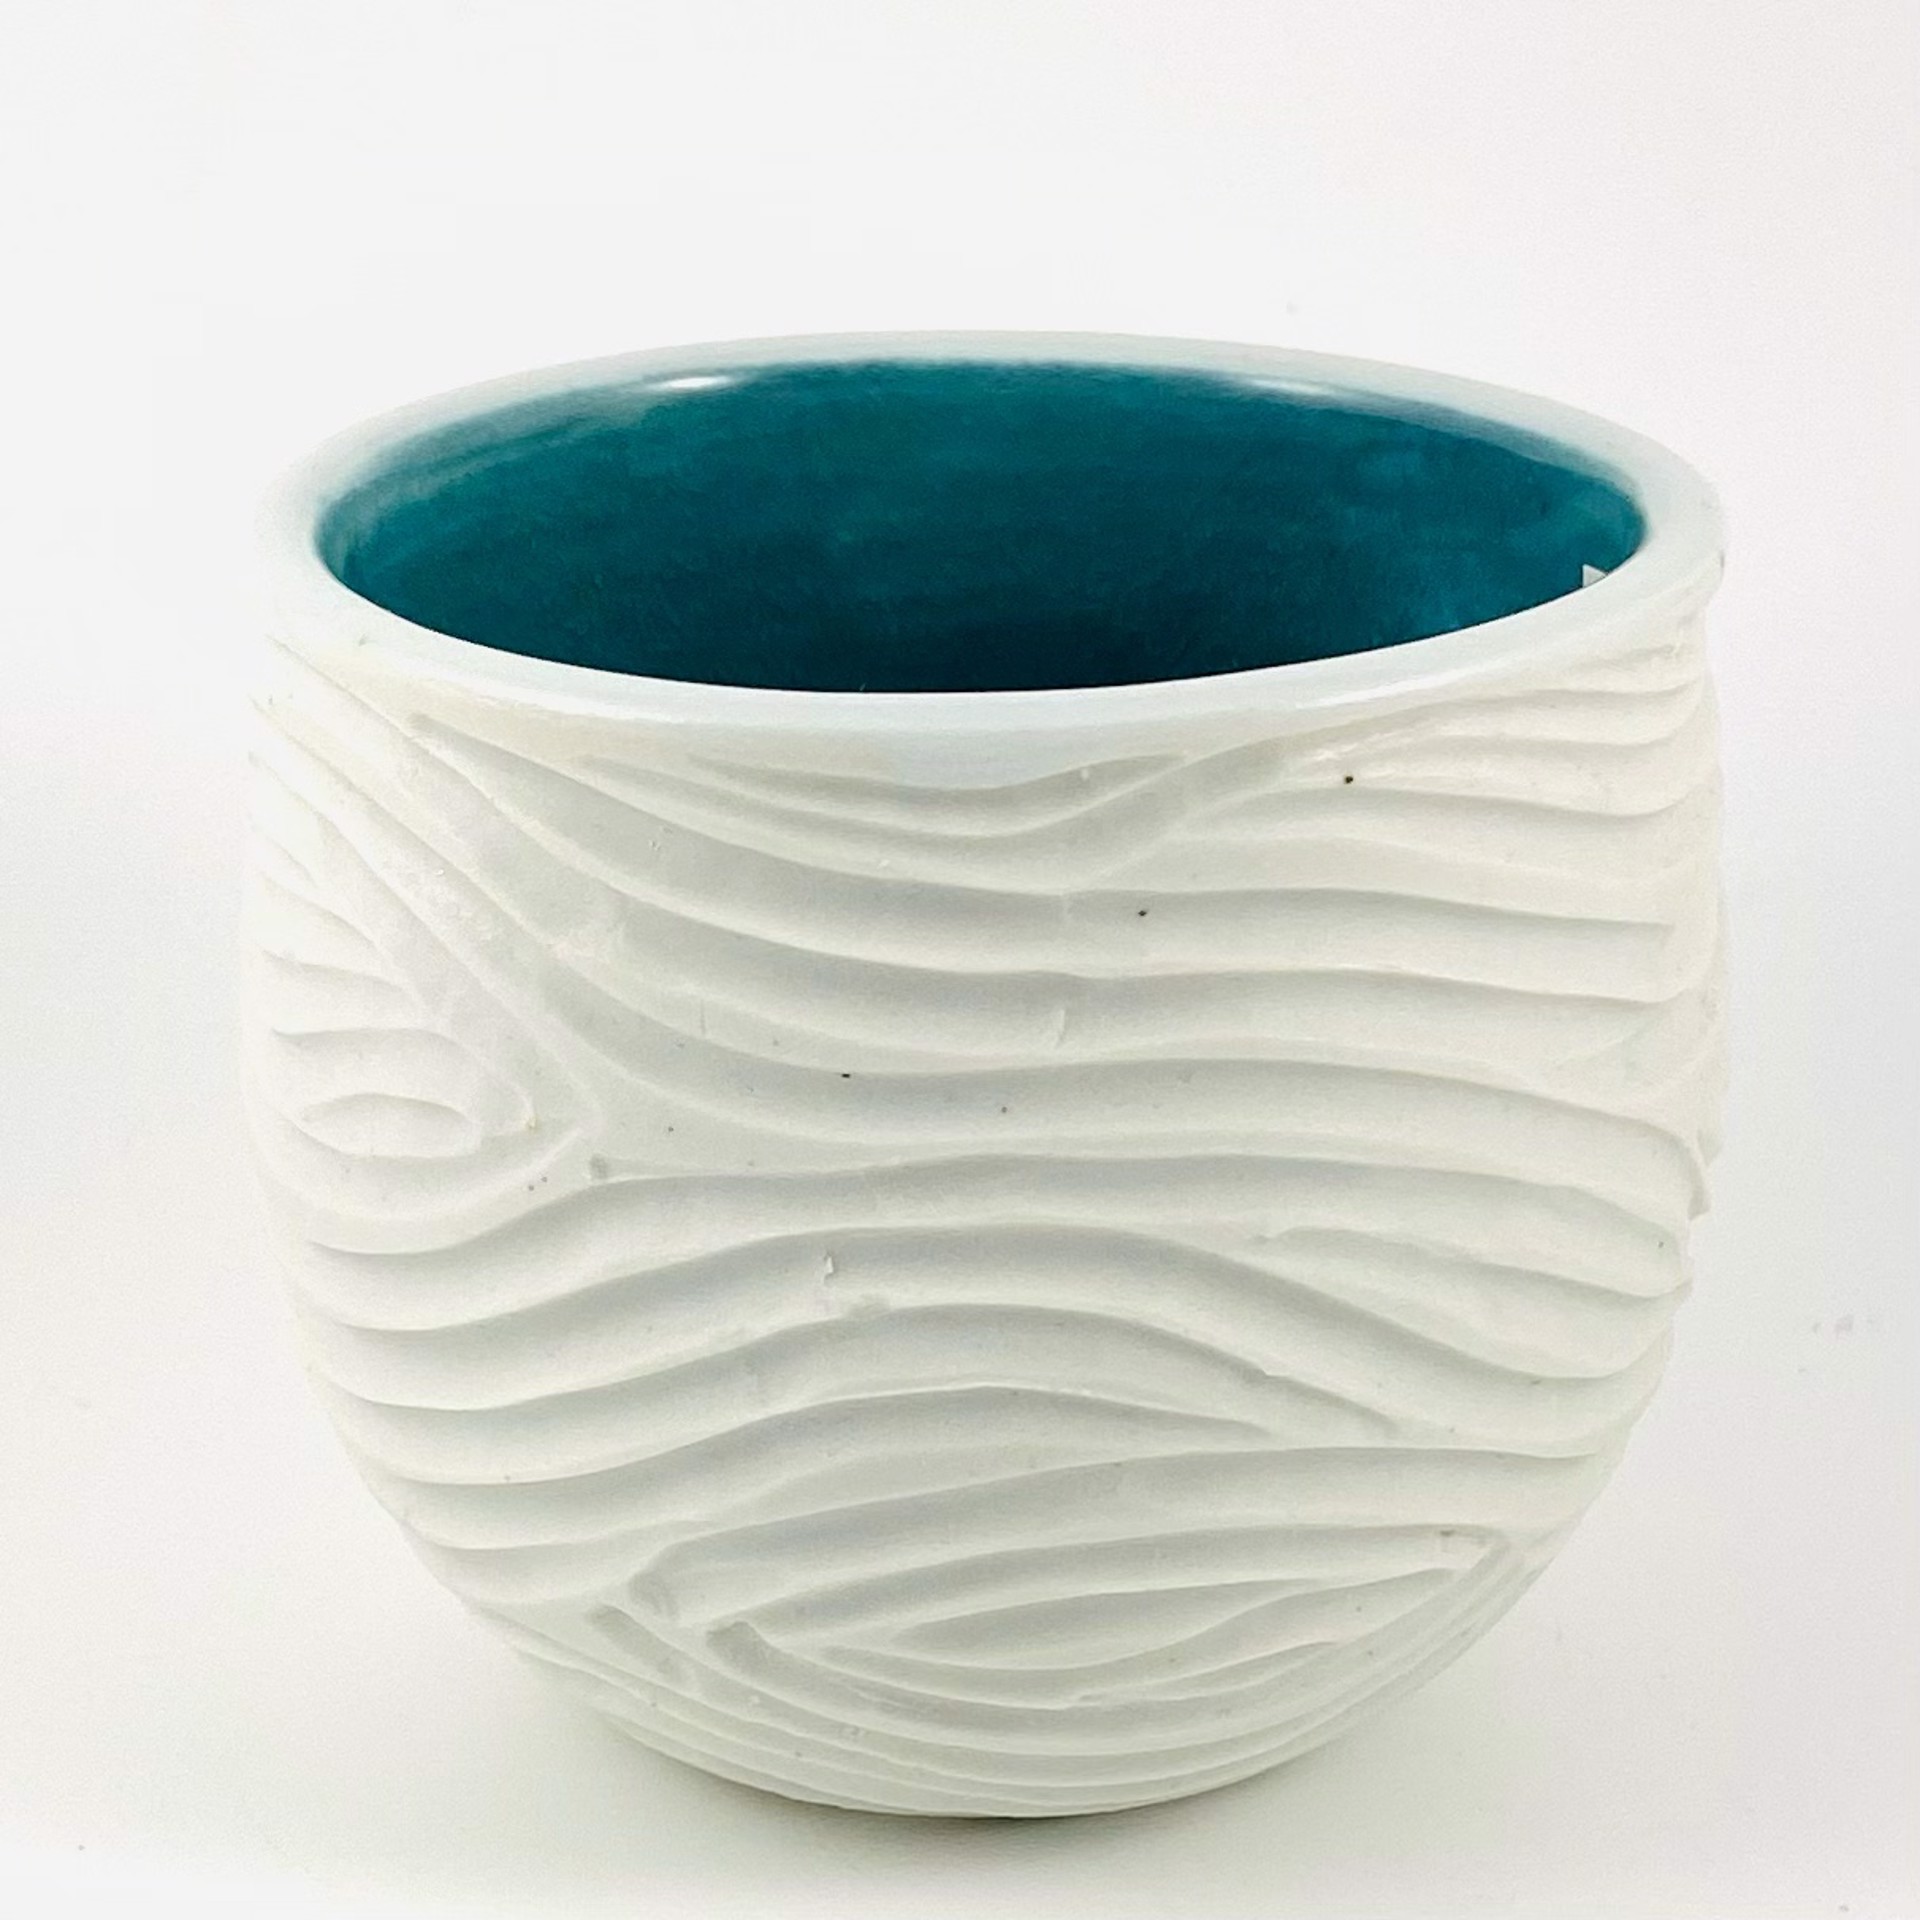 Textured Cup with Light Blue Glazed Interior AJ21-1 by Ann John